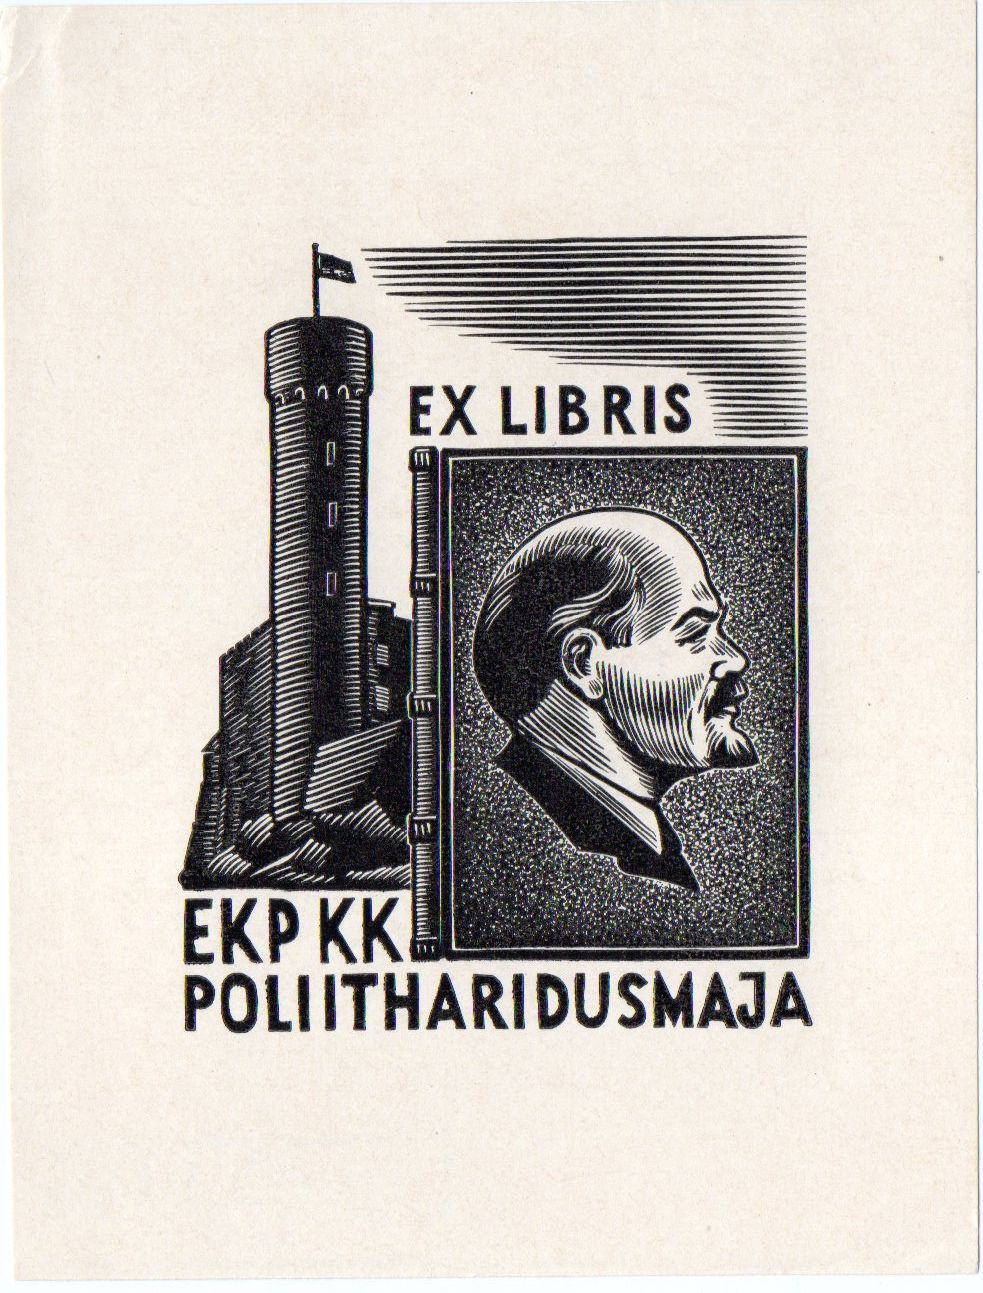 Графіка. Екслібрис. "Ex libris ЕКР КК Poliitharidusmaja" Пауля Лухтейна. Серія "Ленініана". 